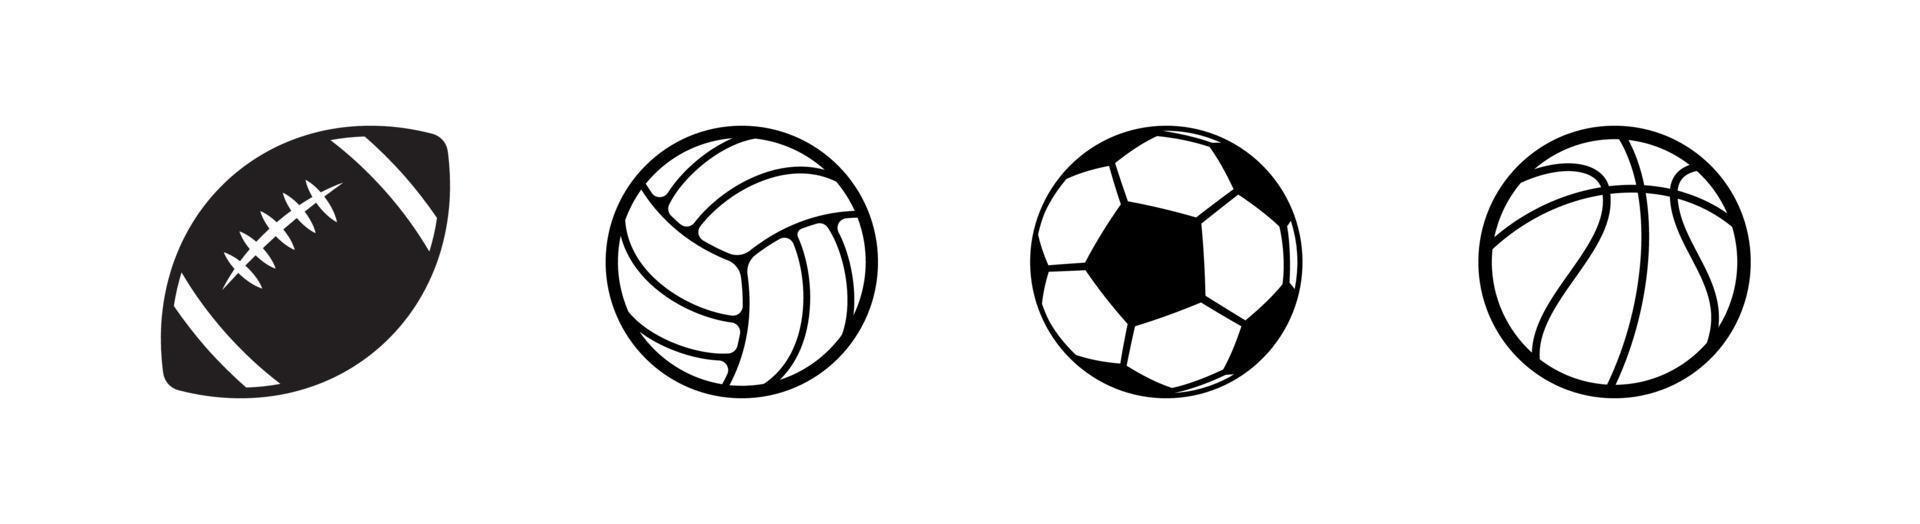 elemento de diseño de icono de bola de juego deportivo popular adecuado para sitios web, diseño de impresión o aplicación vector